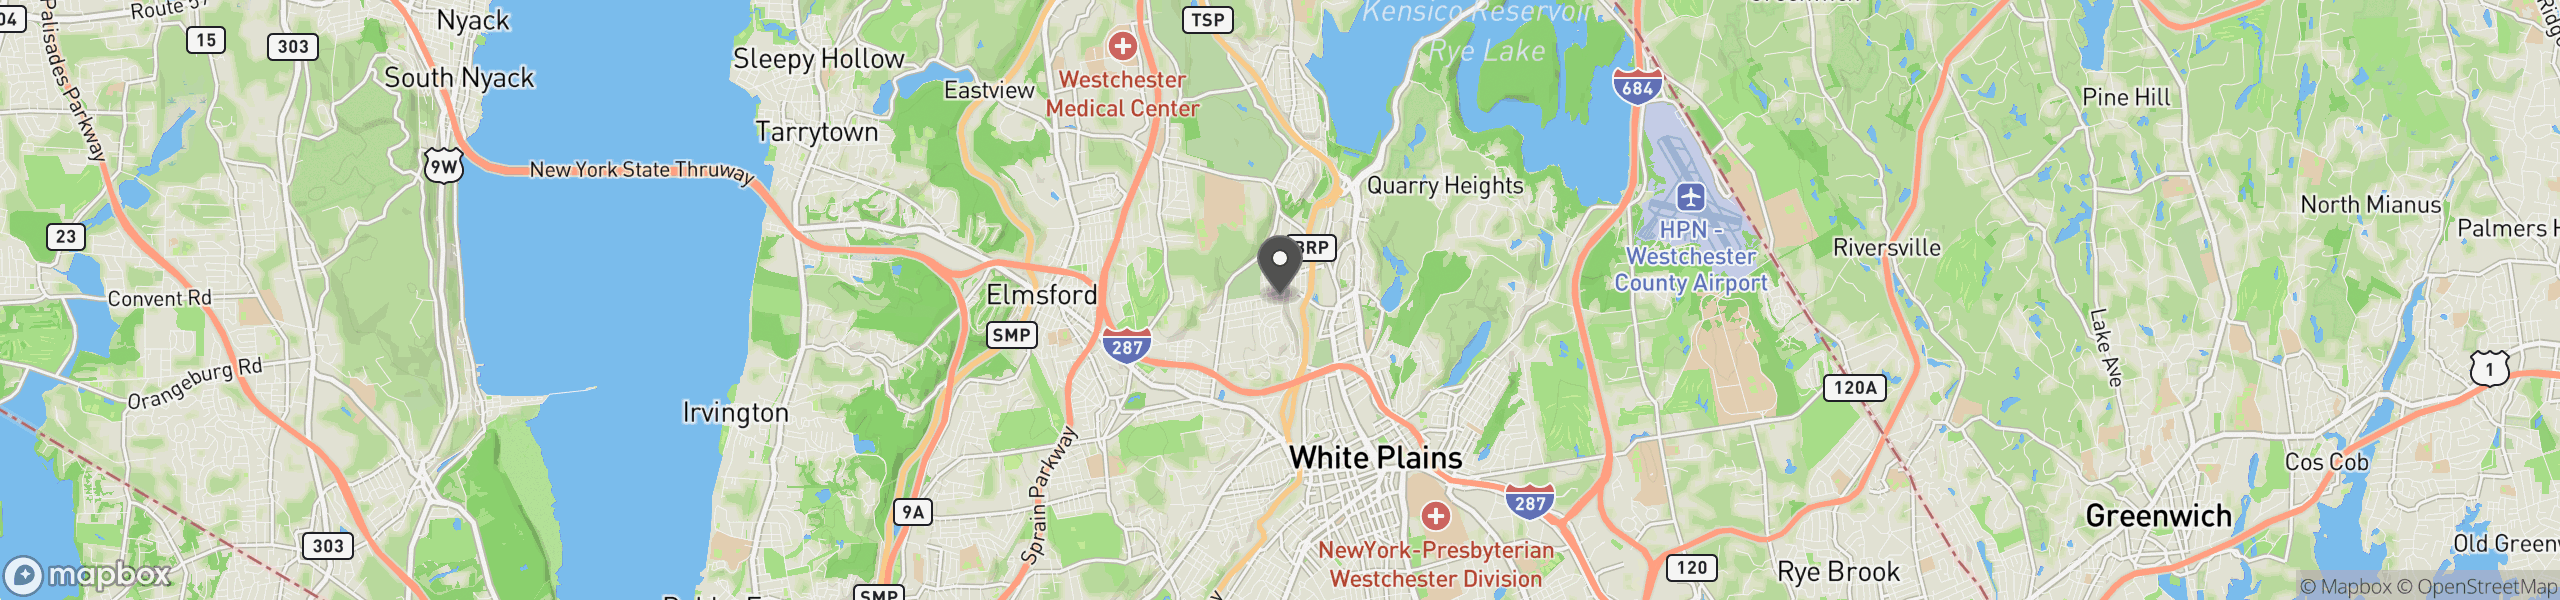 White Plains, NY 10603